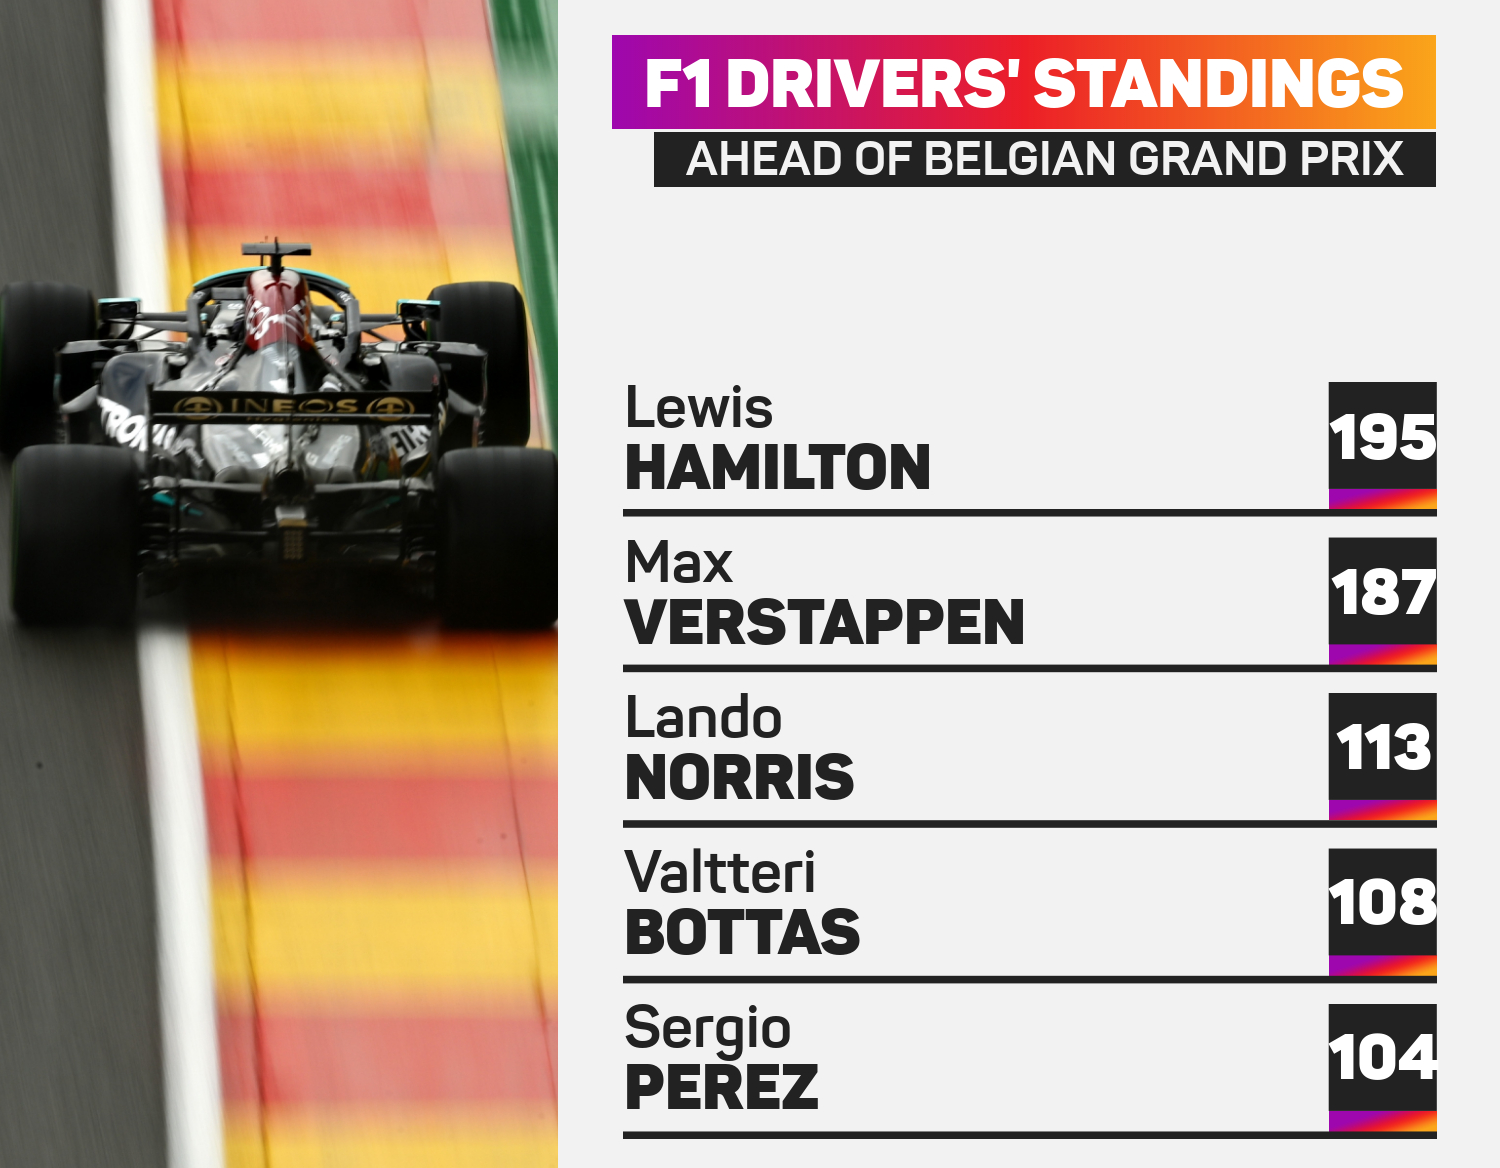 Lewis Hamilton leads the drivers' championship